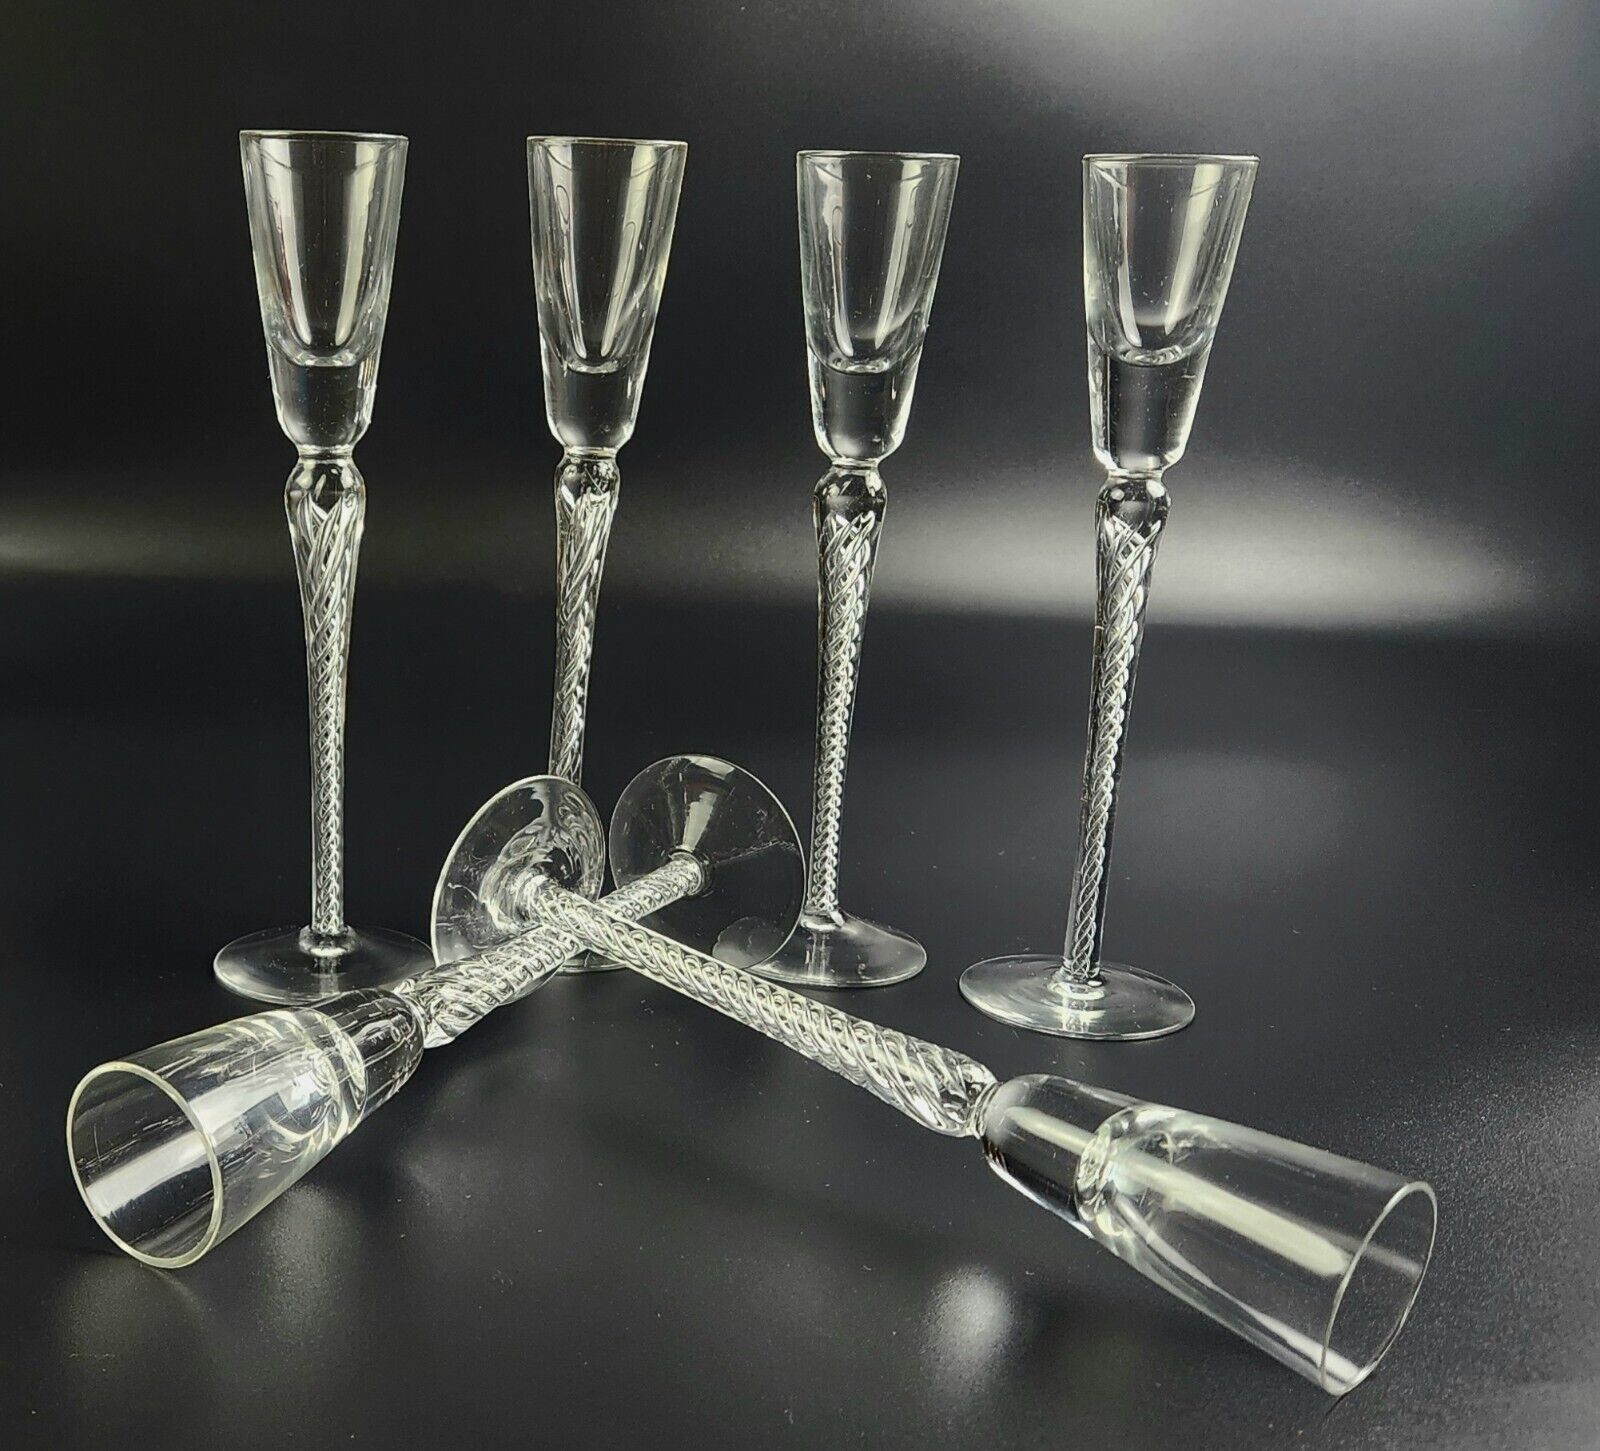 Vintage - Set of 6 - Stunning Cordial Glass Boc270 by BOHEMIA CRYSTAL-CRYSTALEX